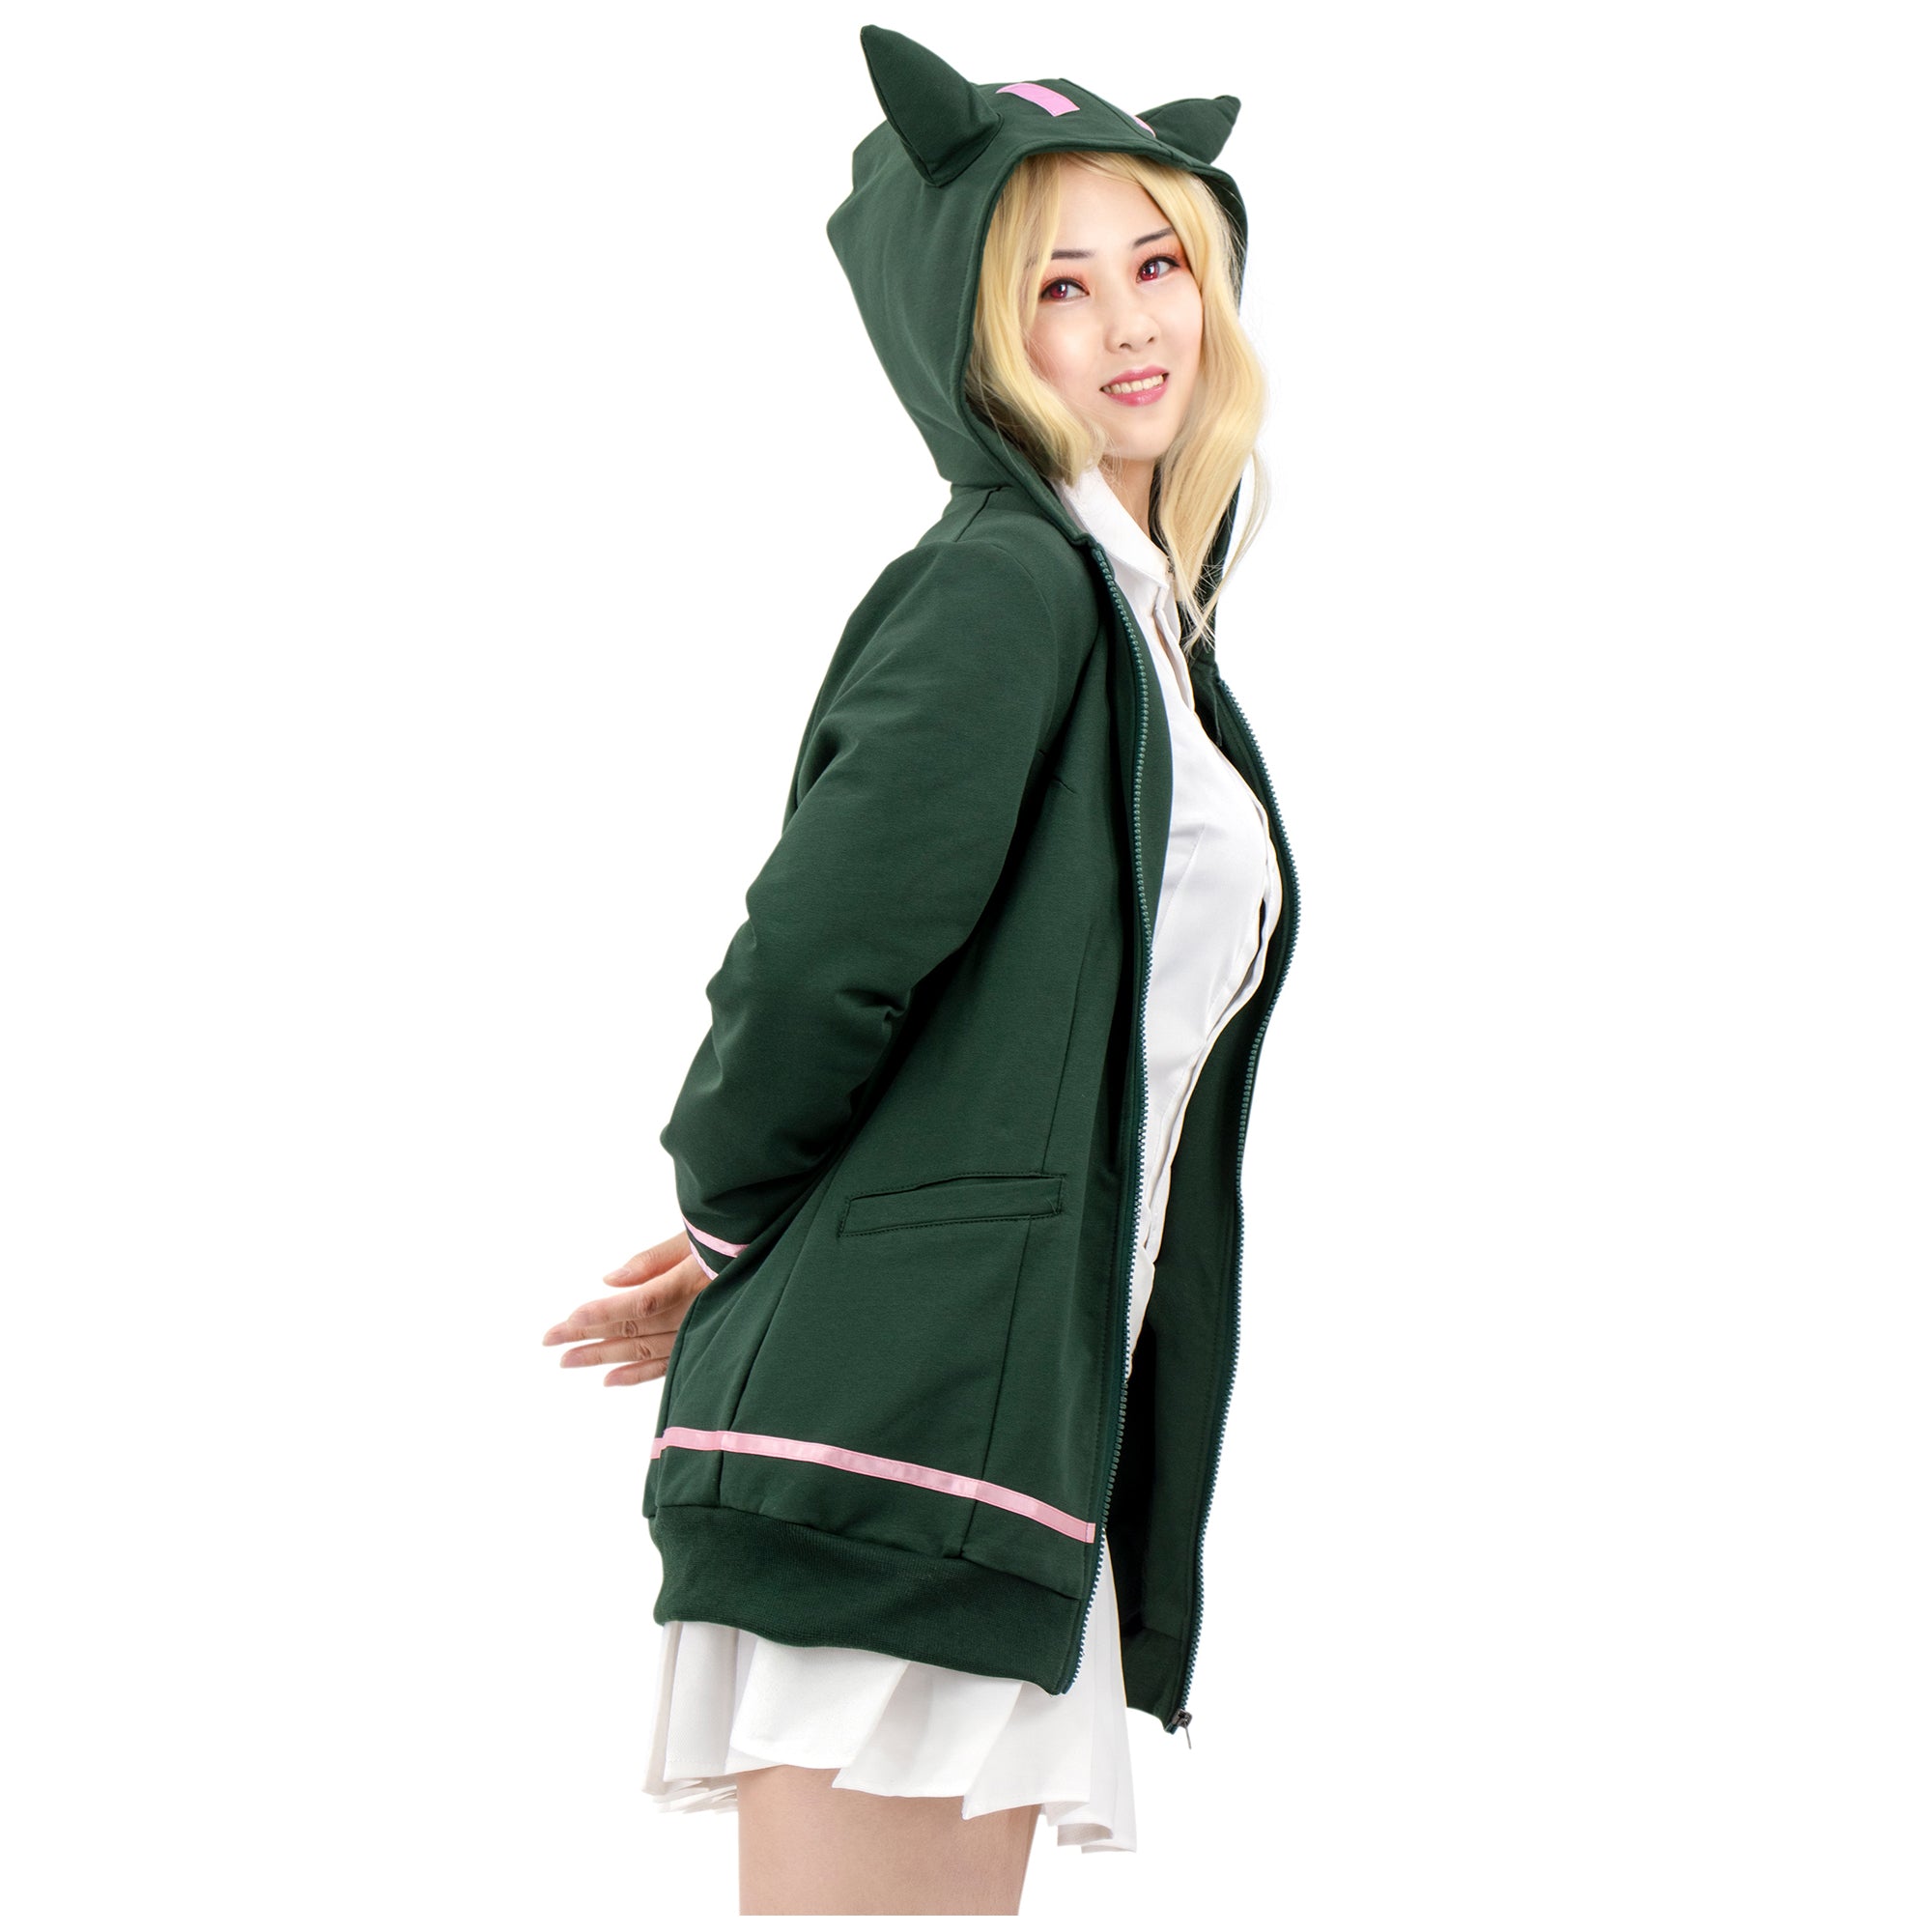 US Size Adult Anime Chiaki Nanami Cosplay Hoodie Coat for Halloween